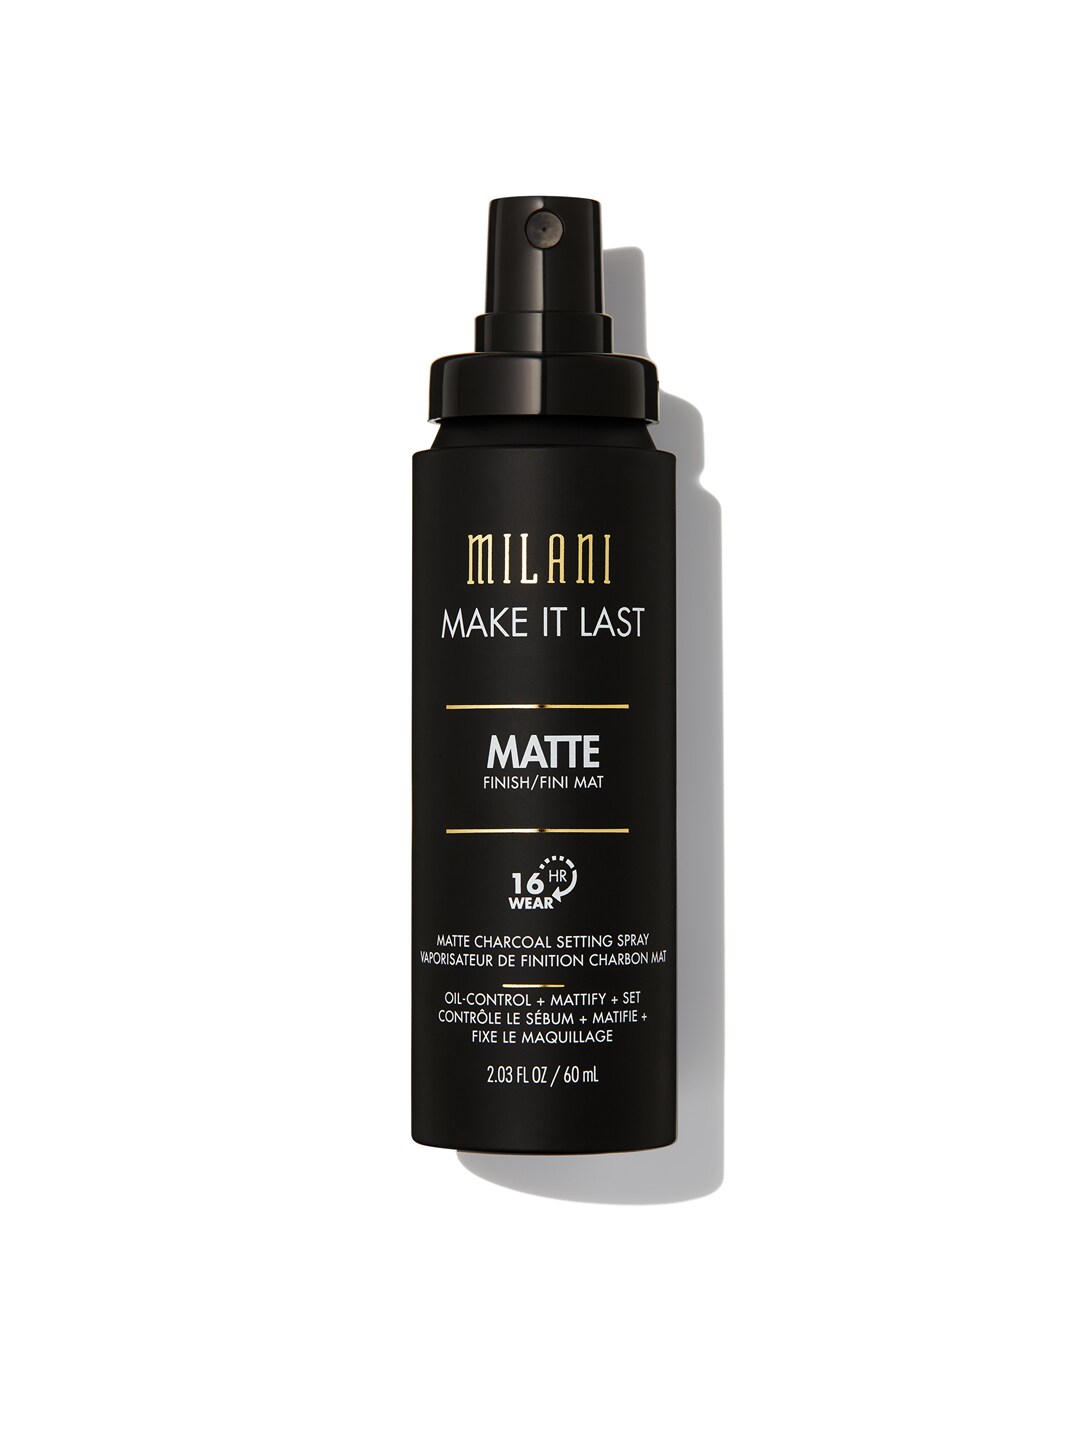 MILANI Make It Last Matte Finish Charcoal Make-Up Setting Spray 60 ml Price in India